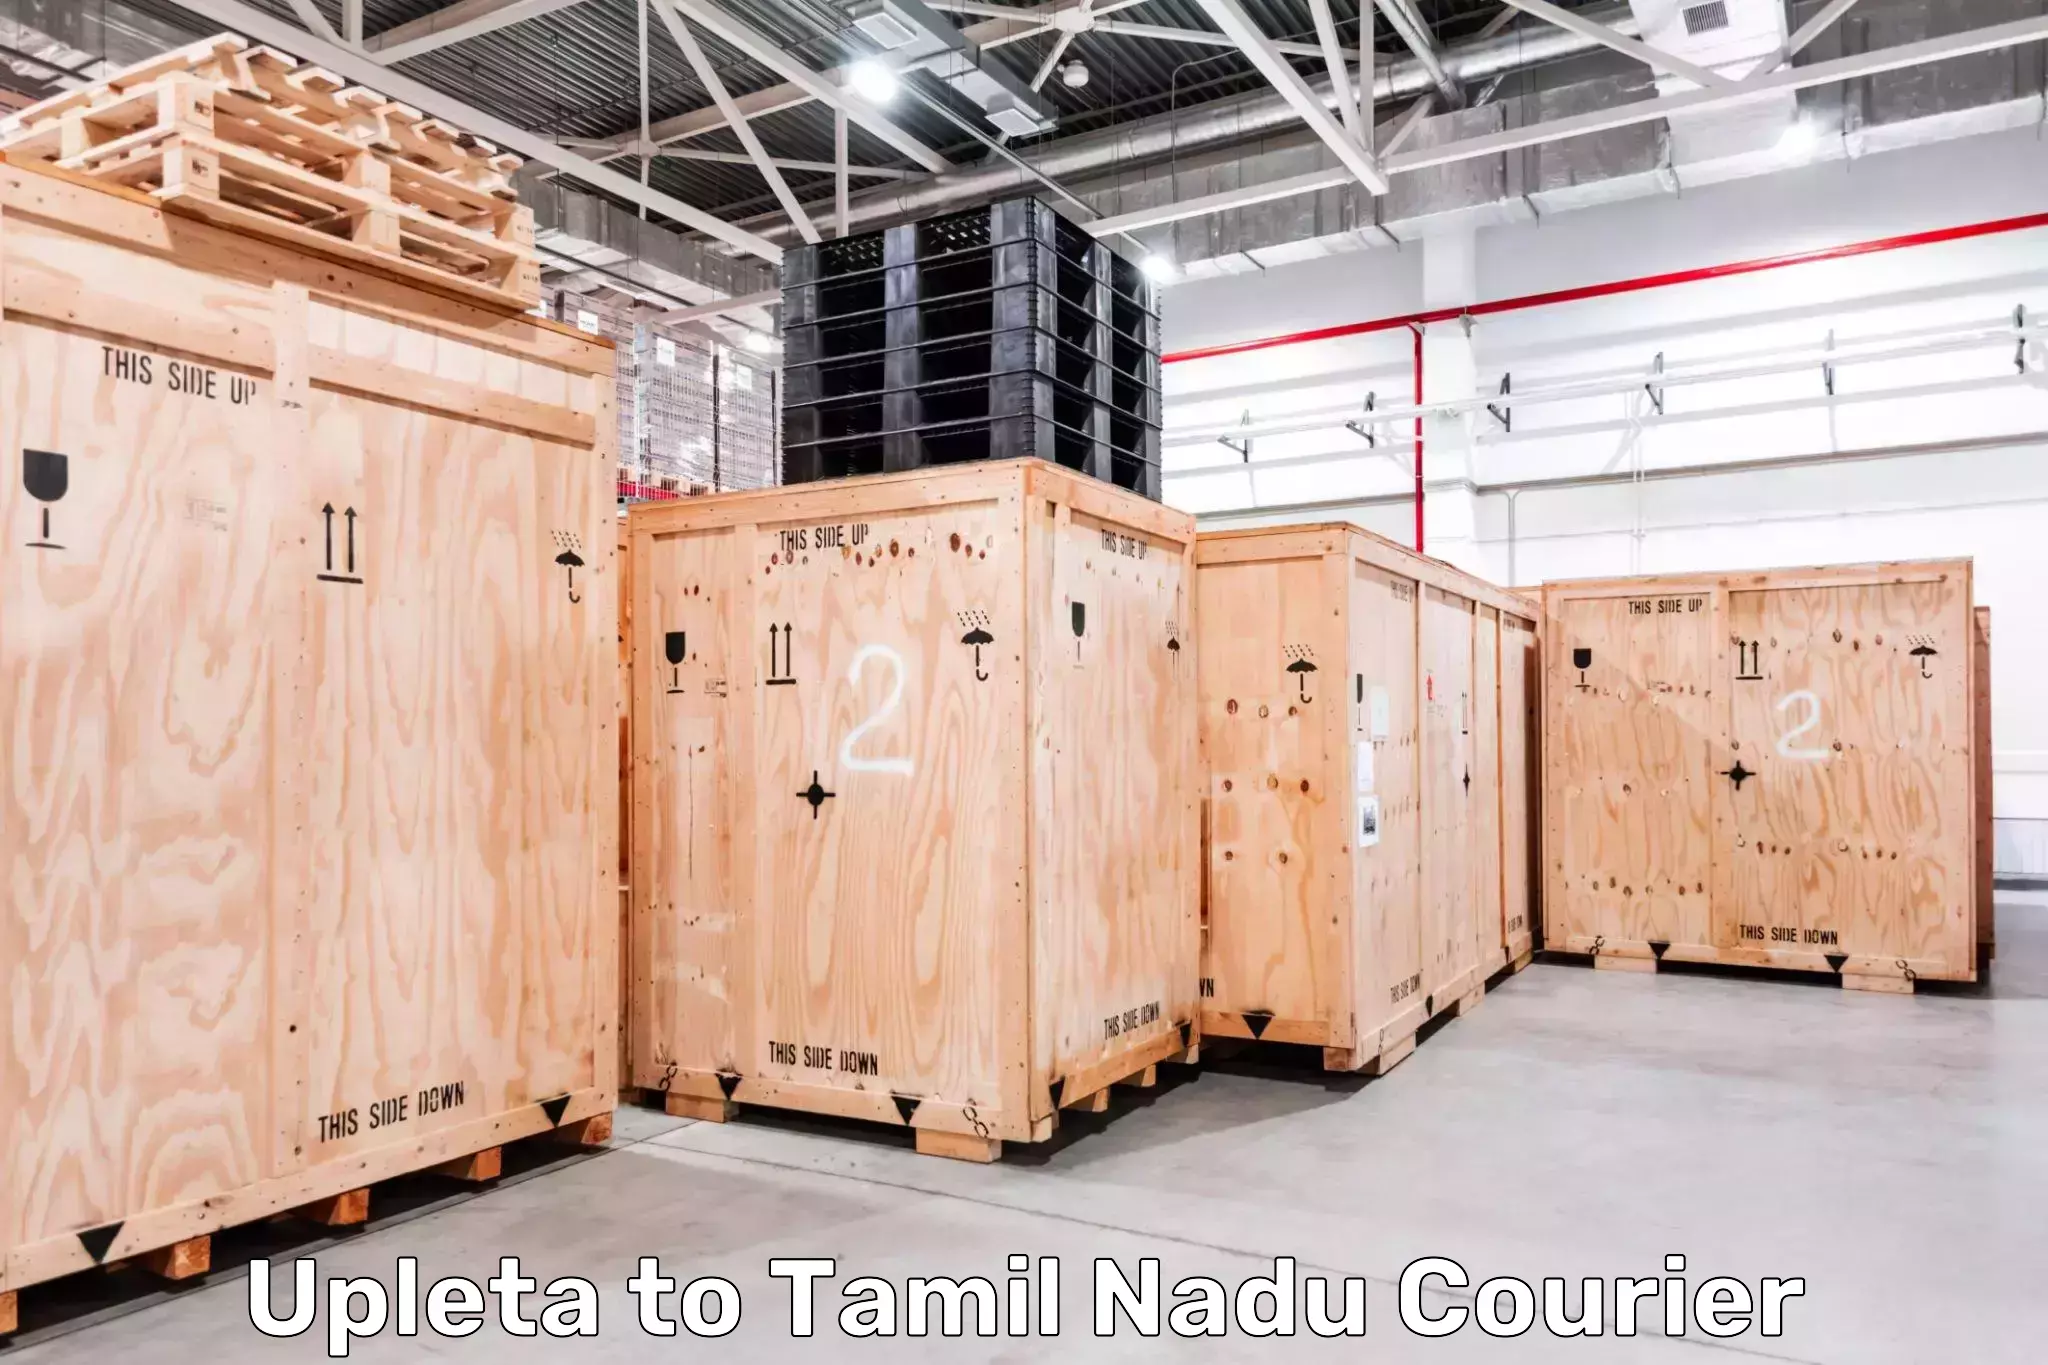 Package delivery network Upleta to Kalpakkam